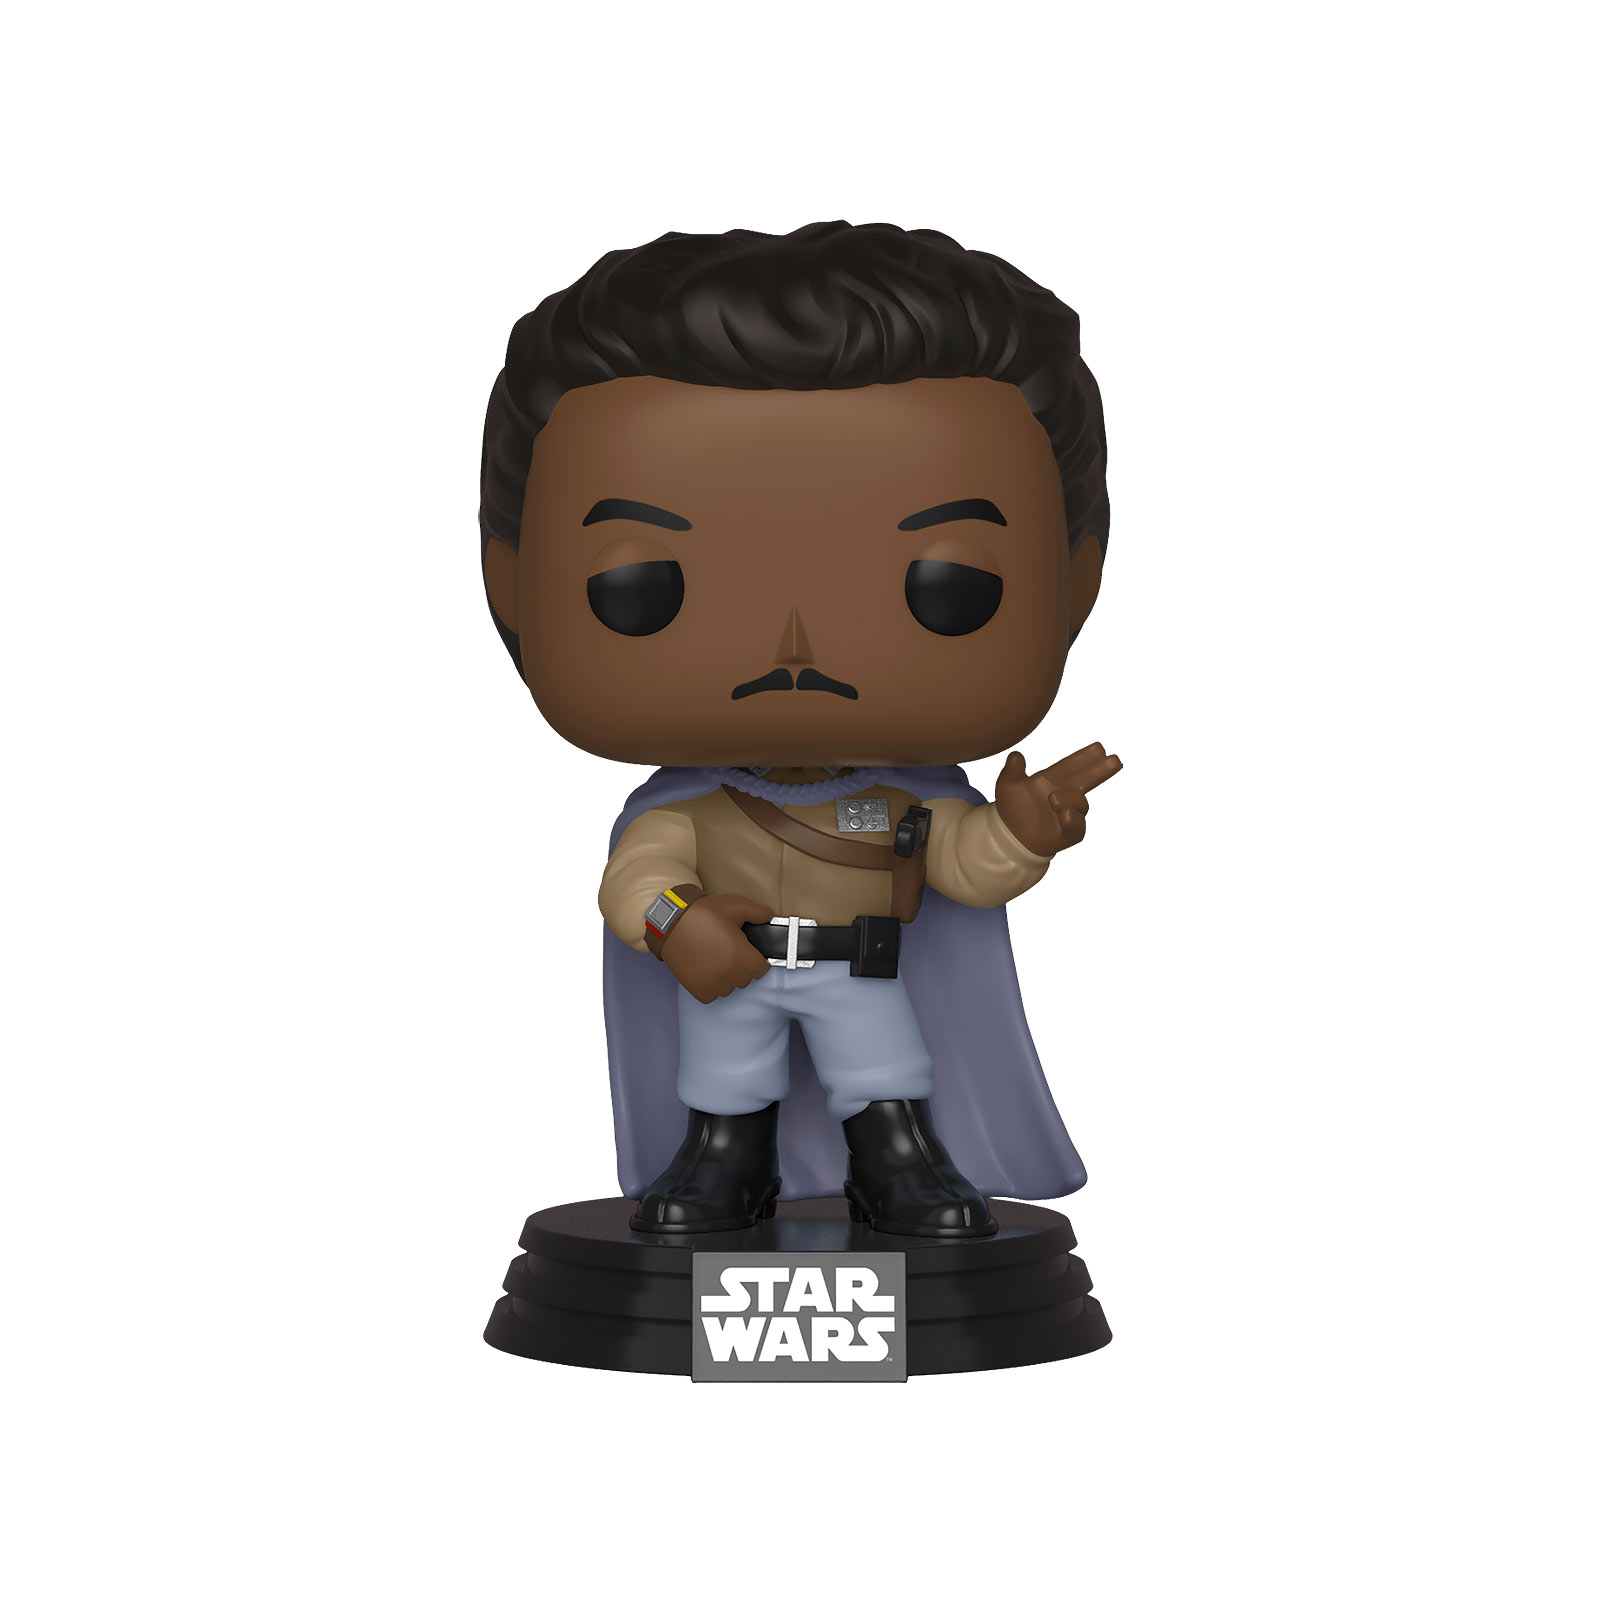 Star Wars - Général Lando Calrissian Figurine Funko Pop à tête branlante